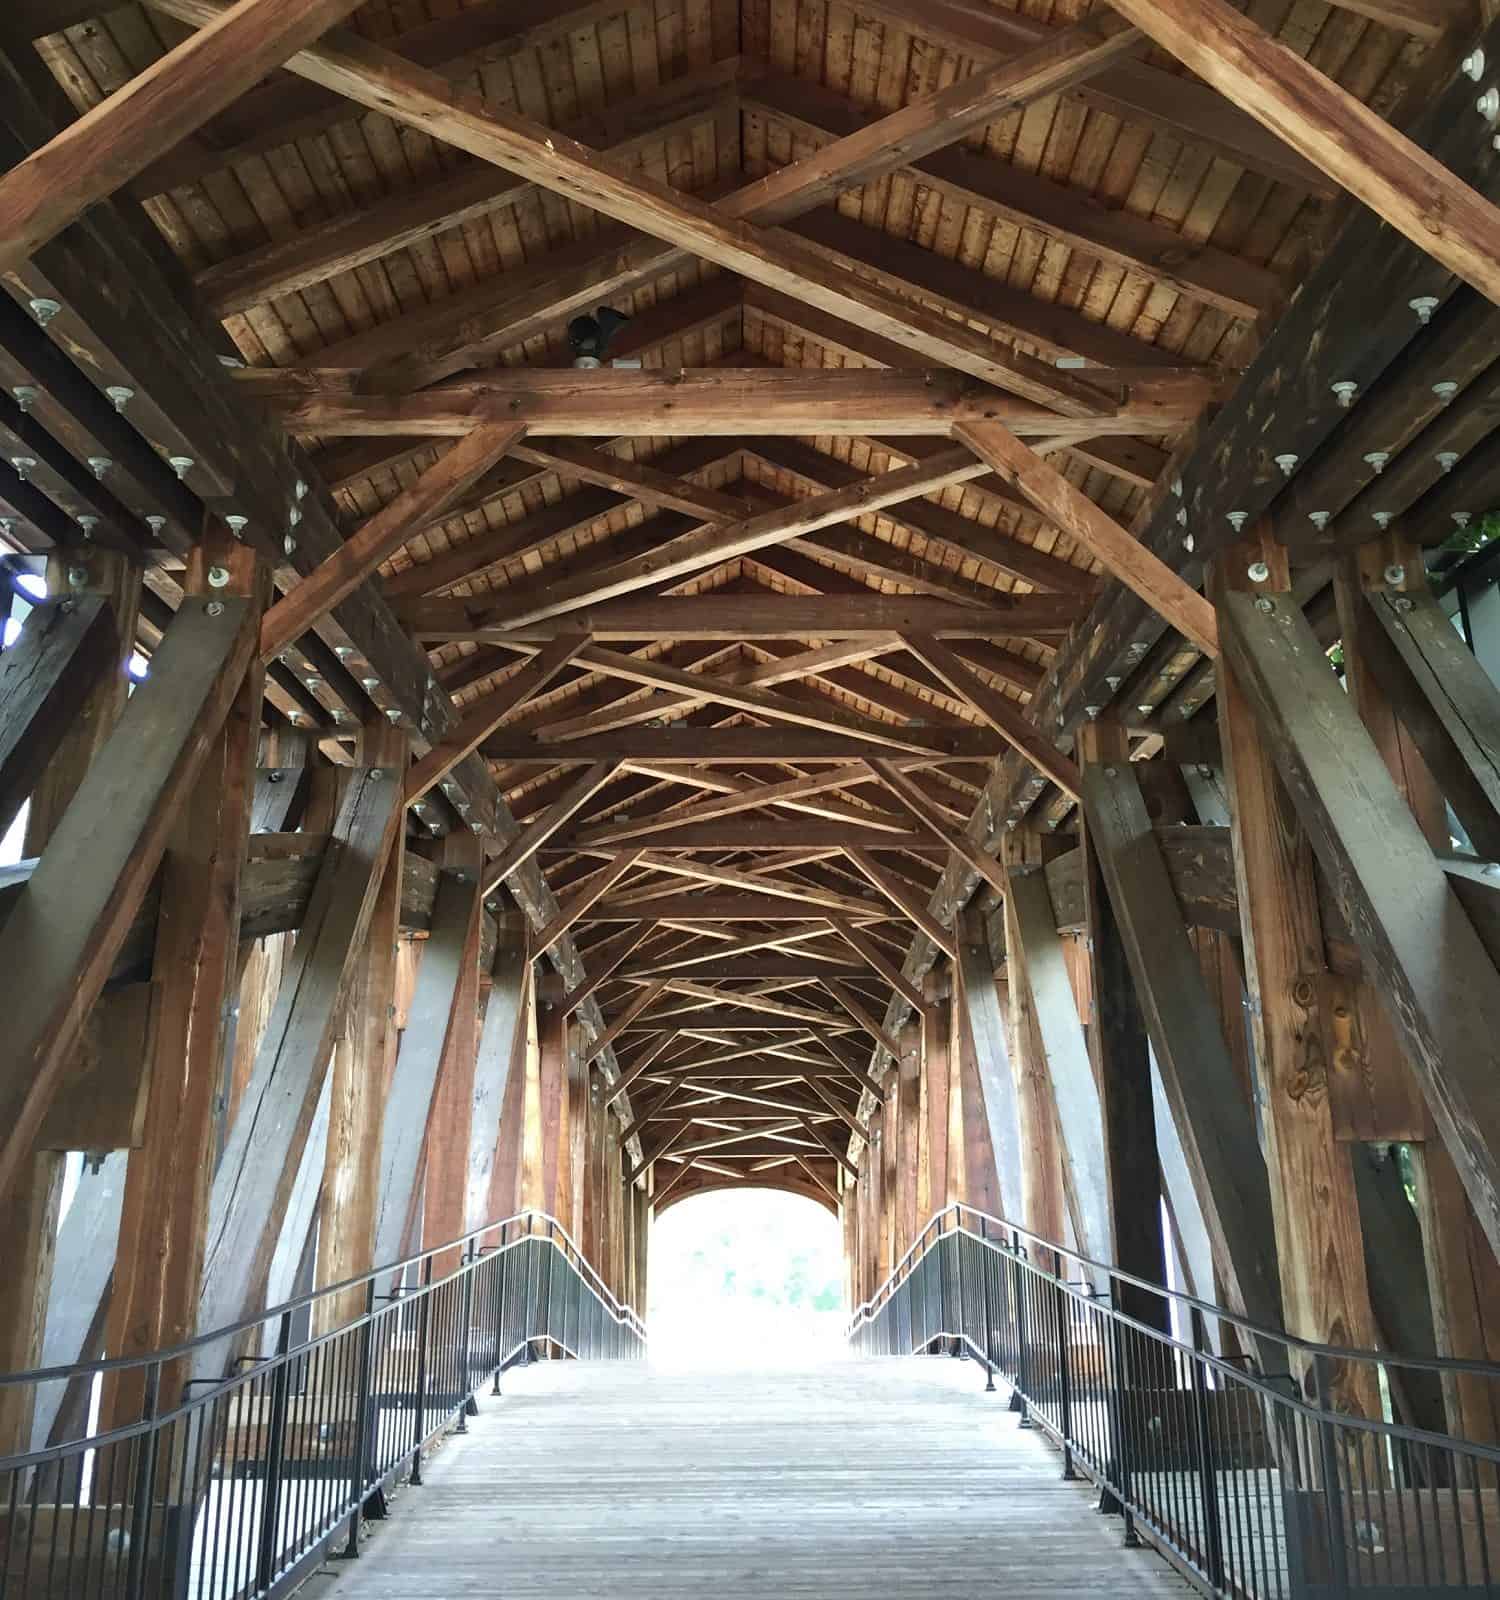 Wooden walkway bridge in Old Salem, North Carolina